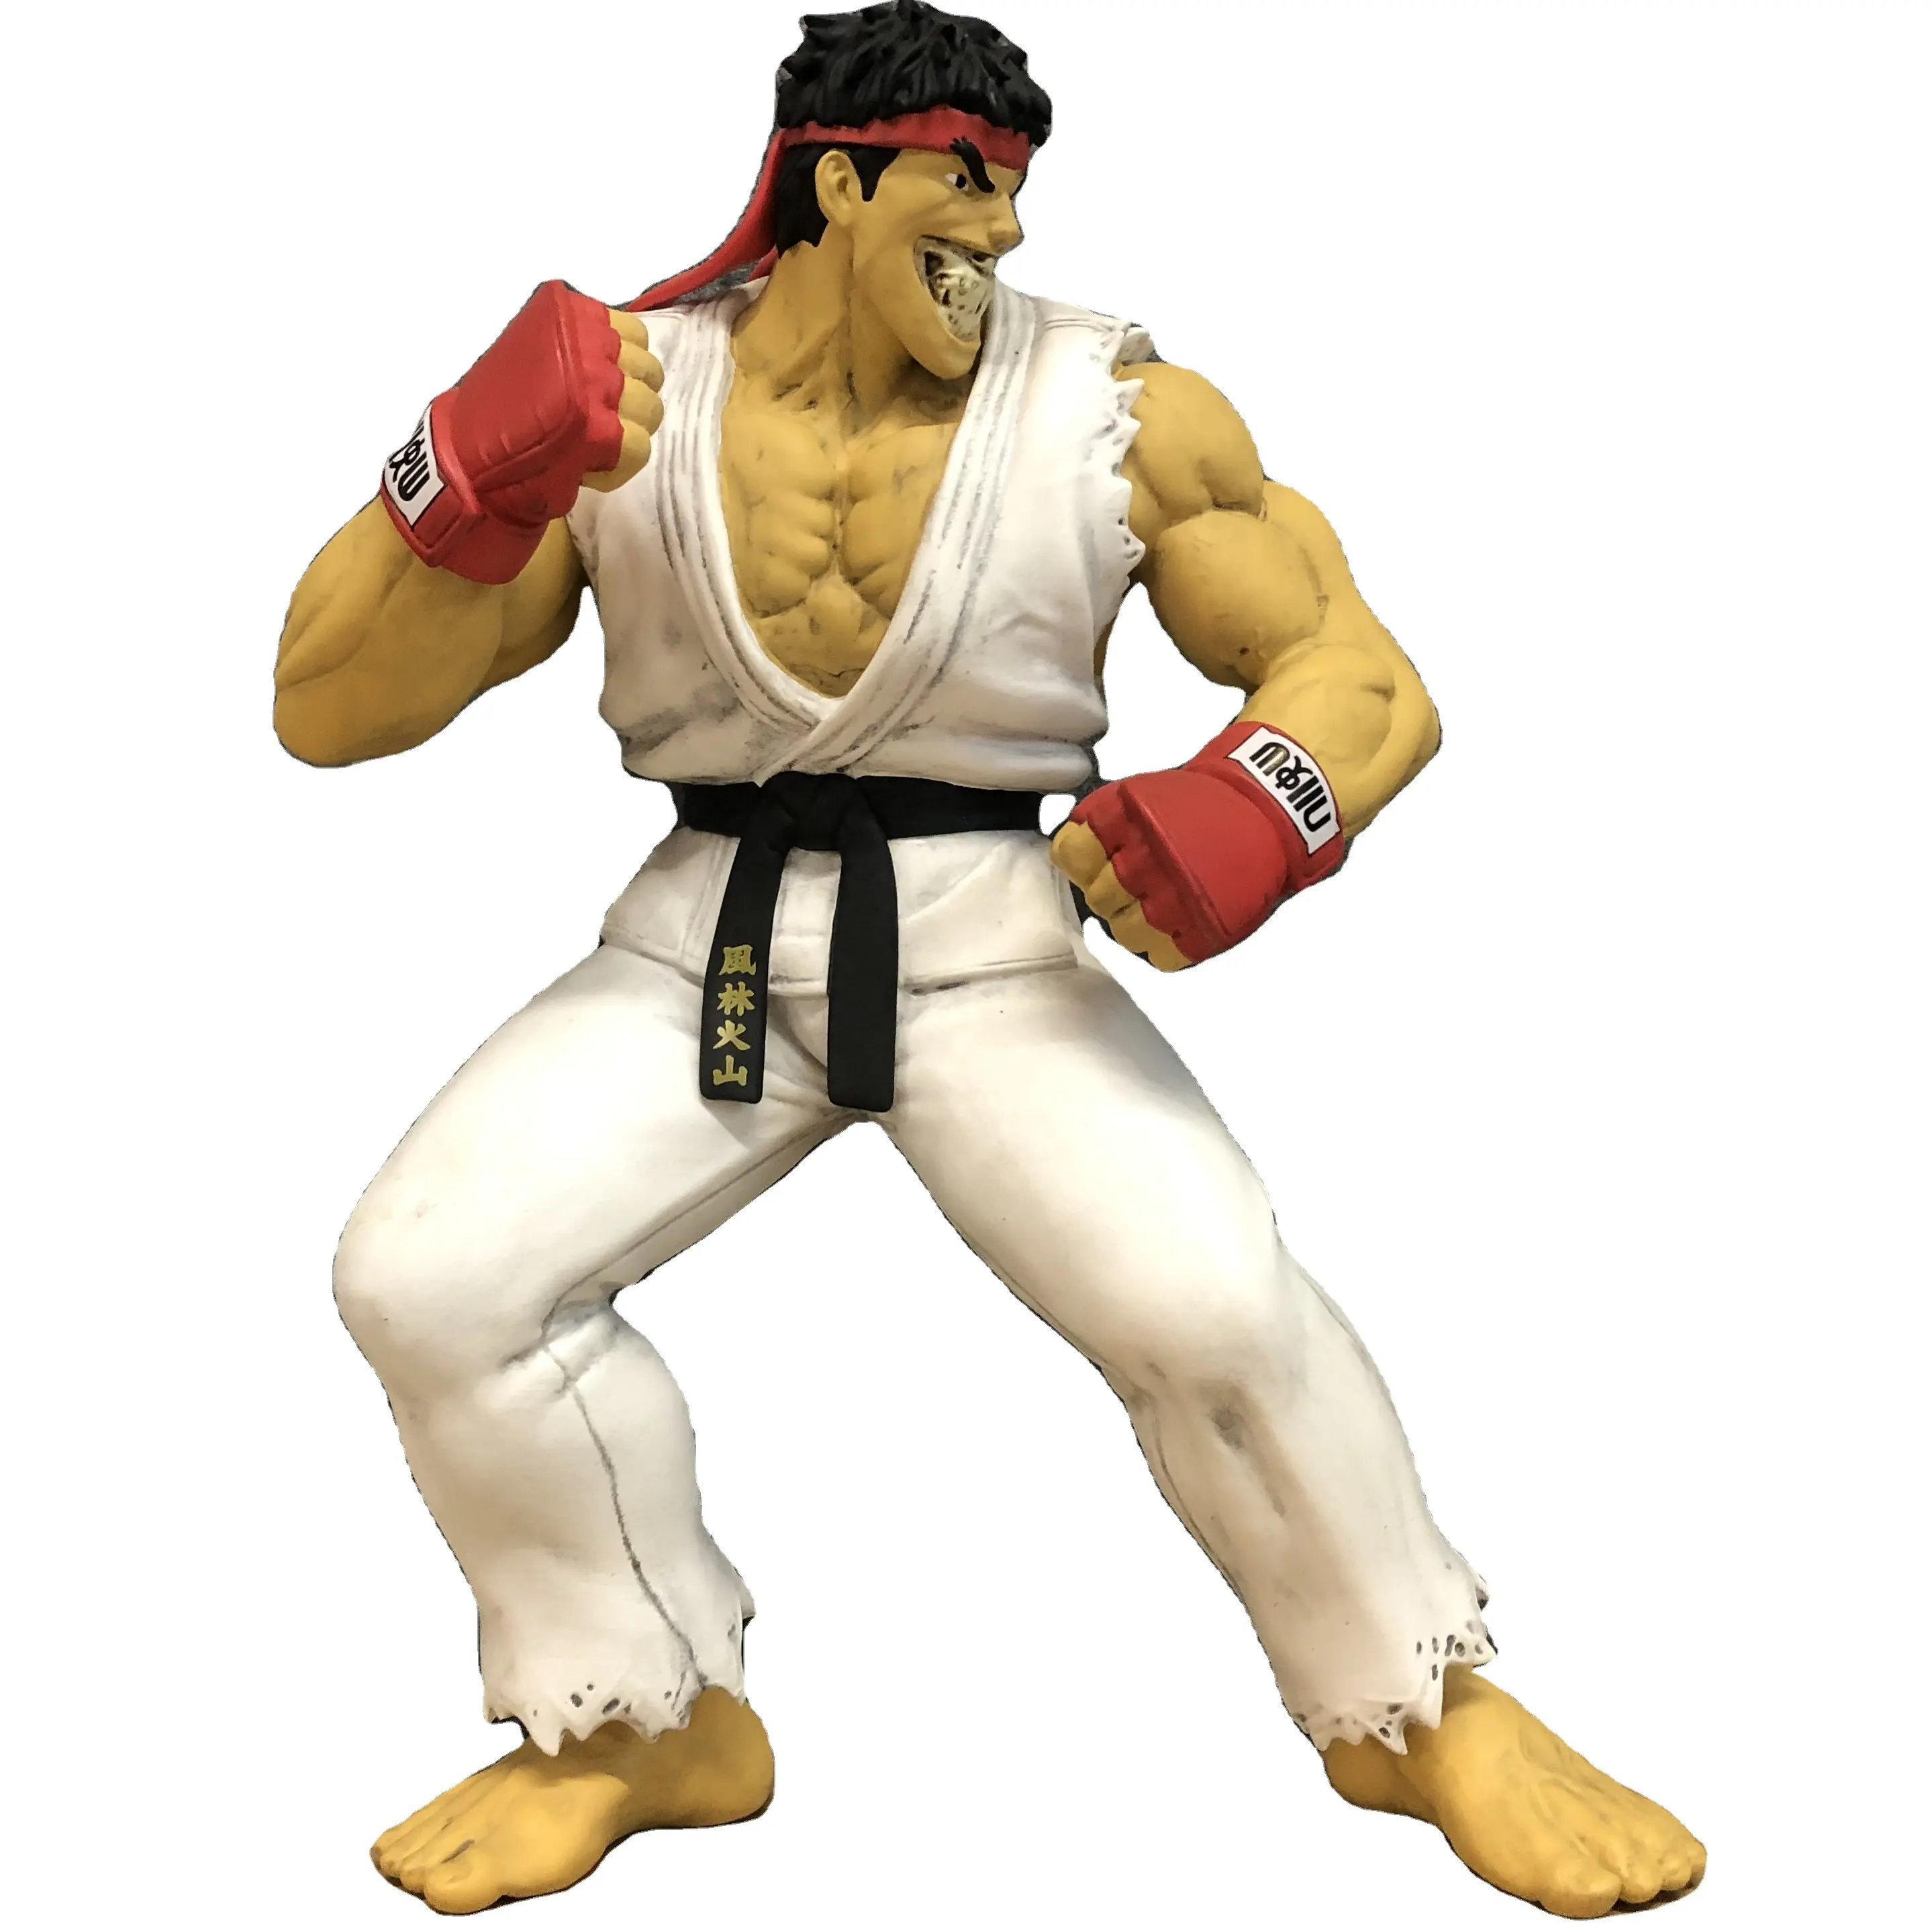 Wrestler boxer action game character factory products figuras de coleccion de anime